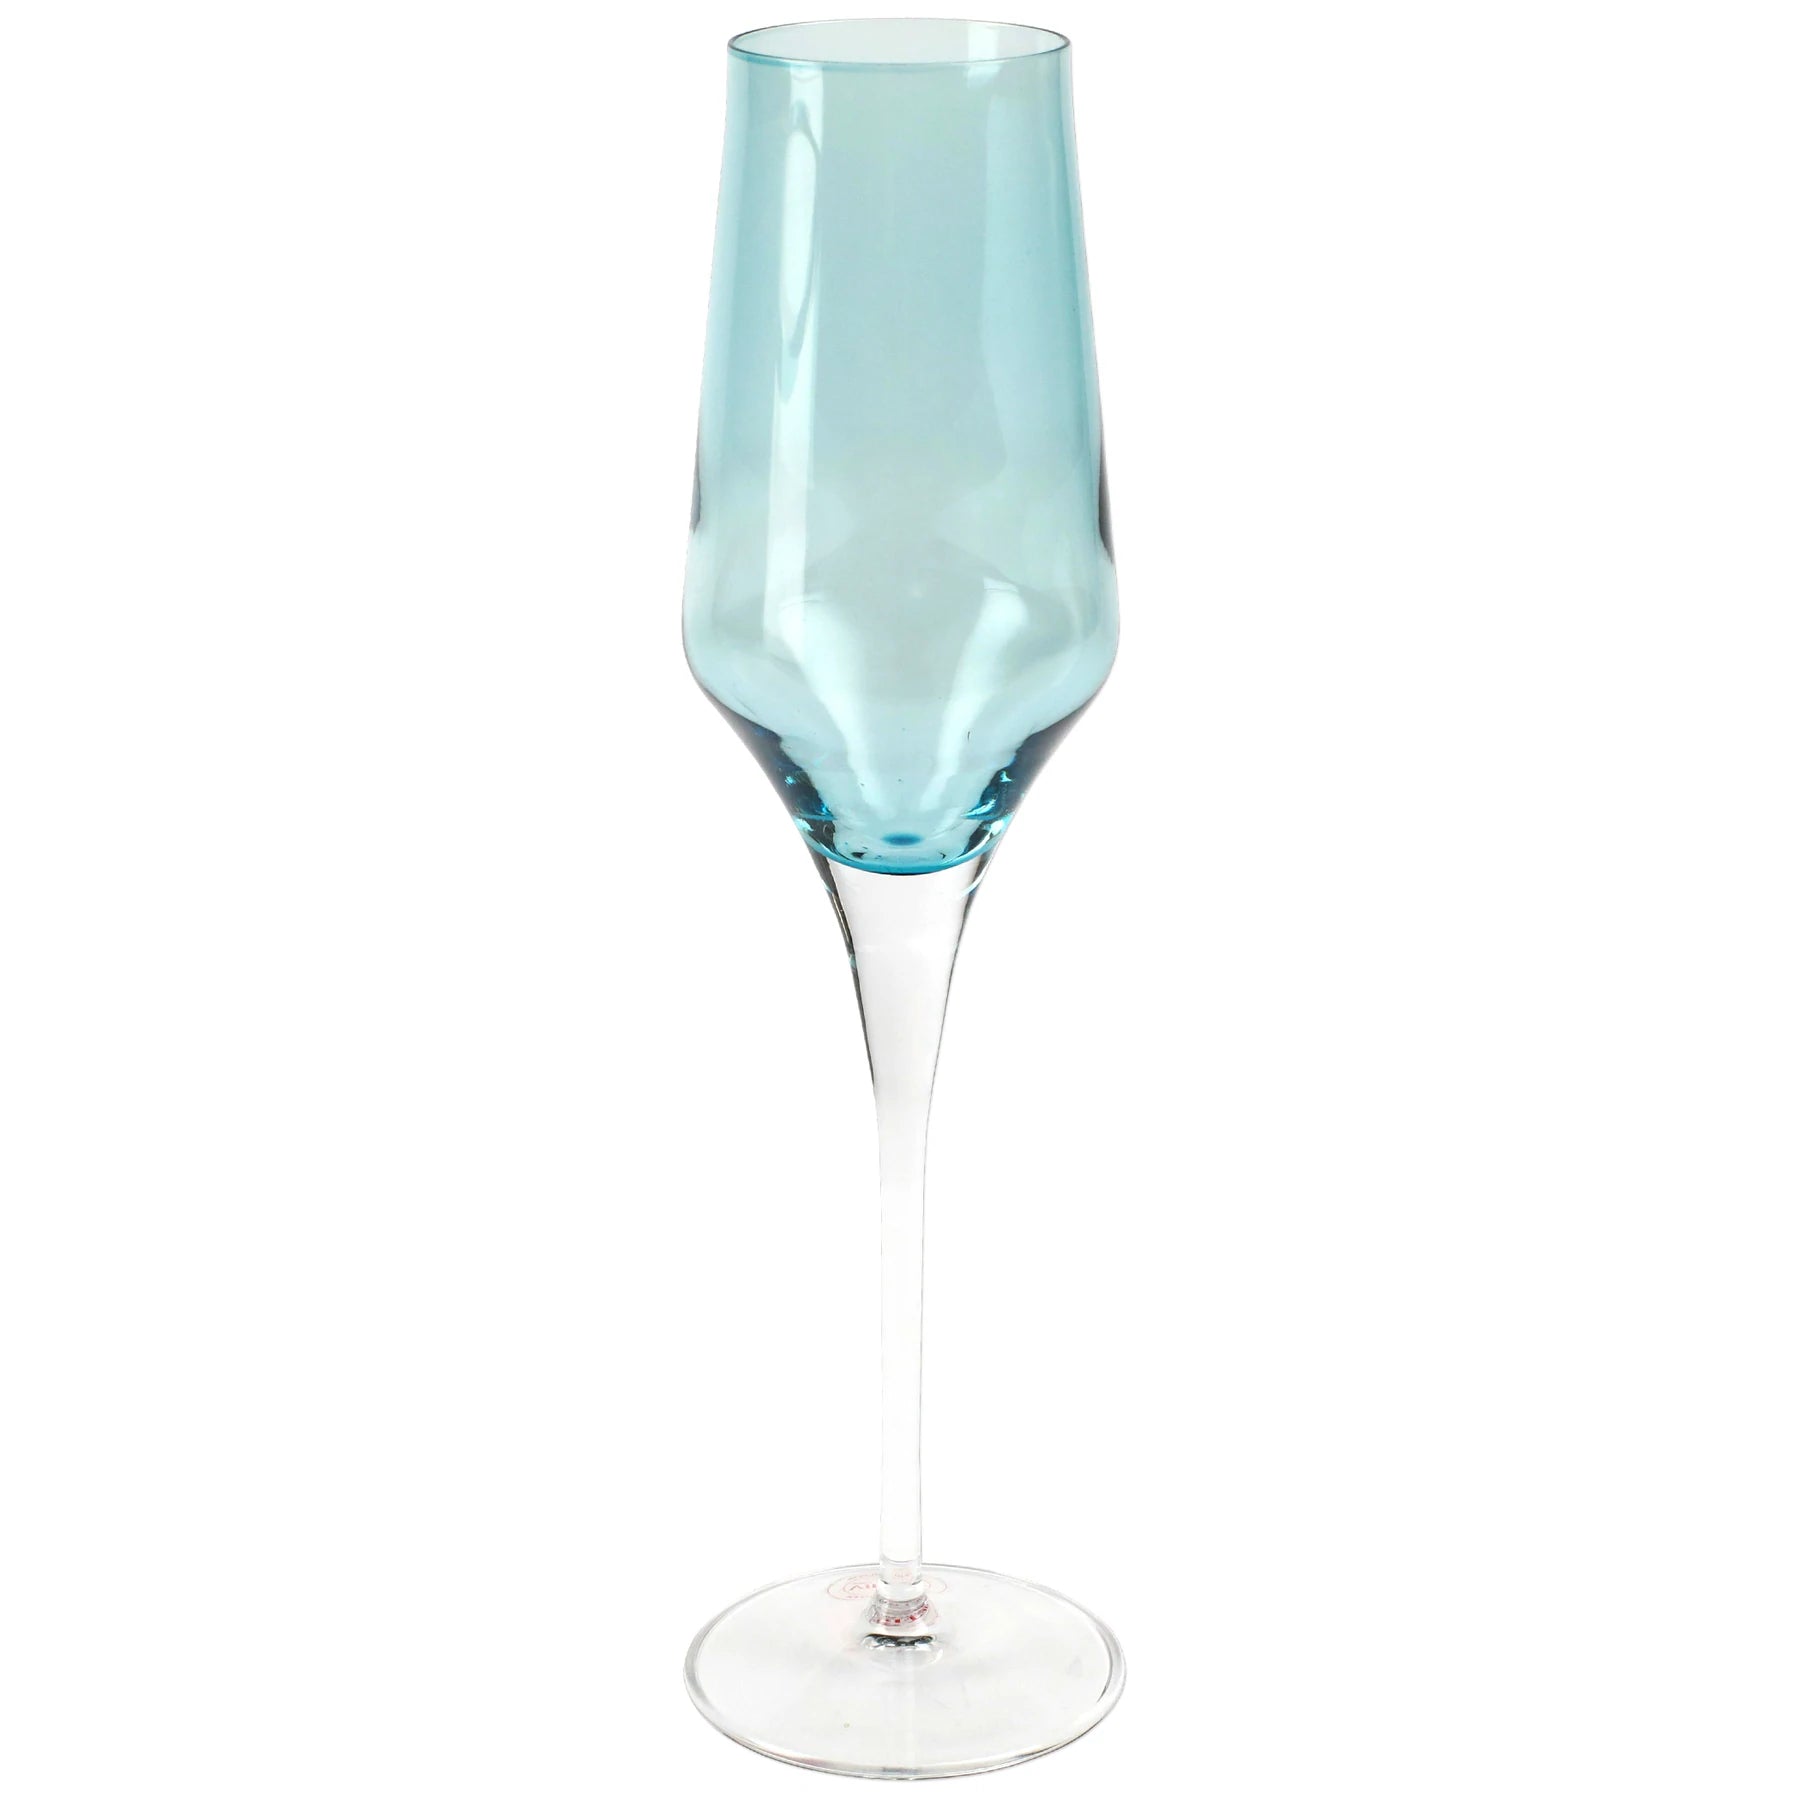 Contessa Teal Champagne Glass